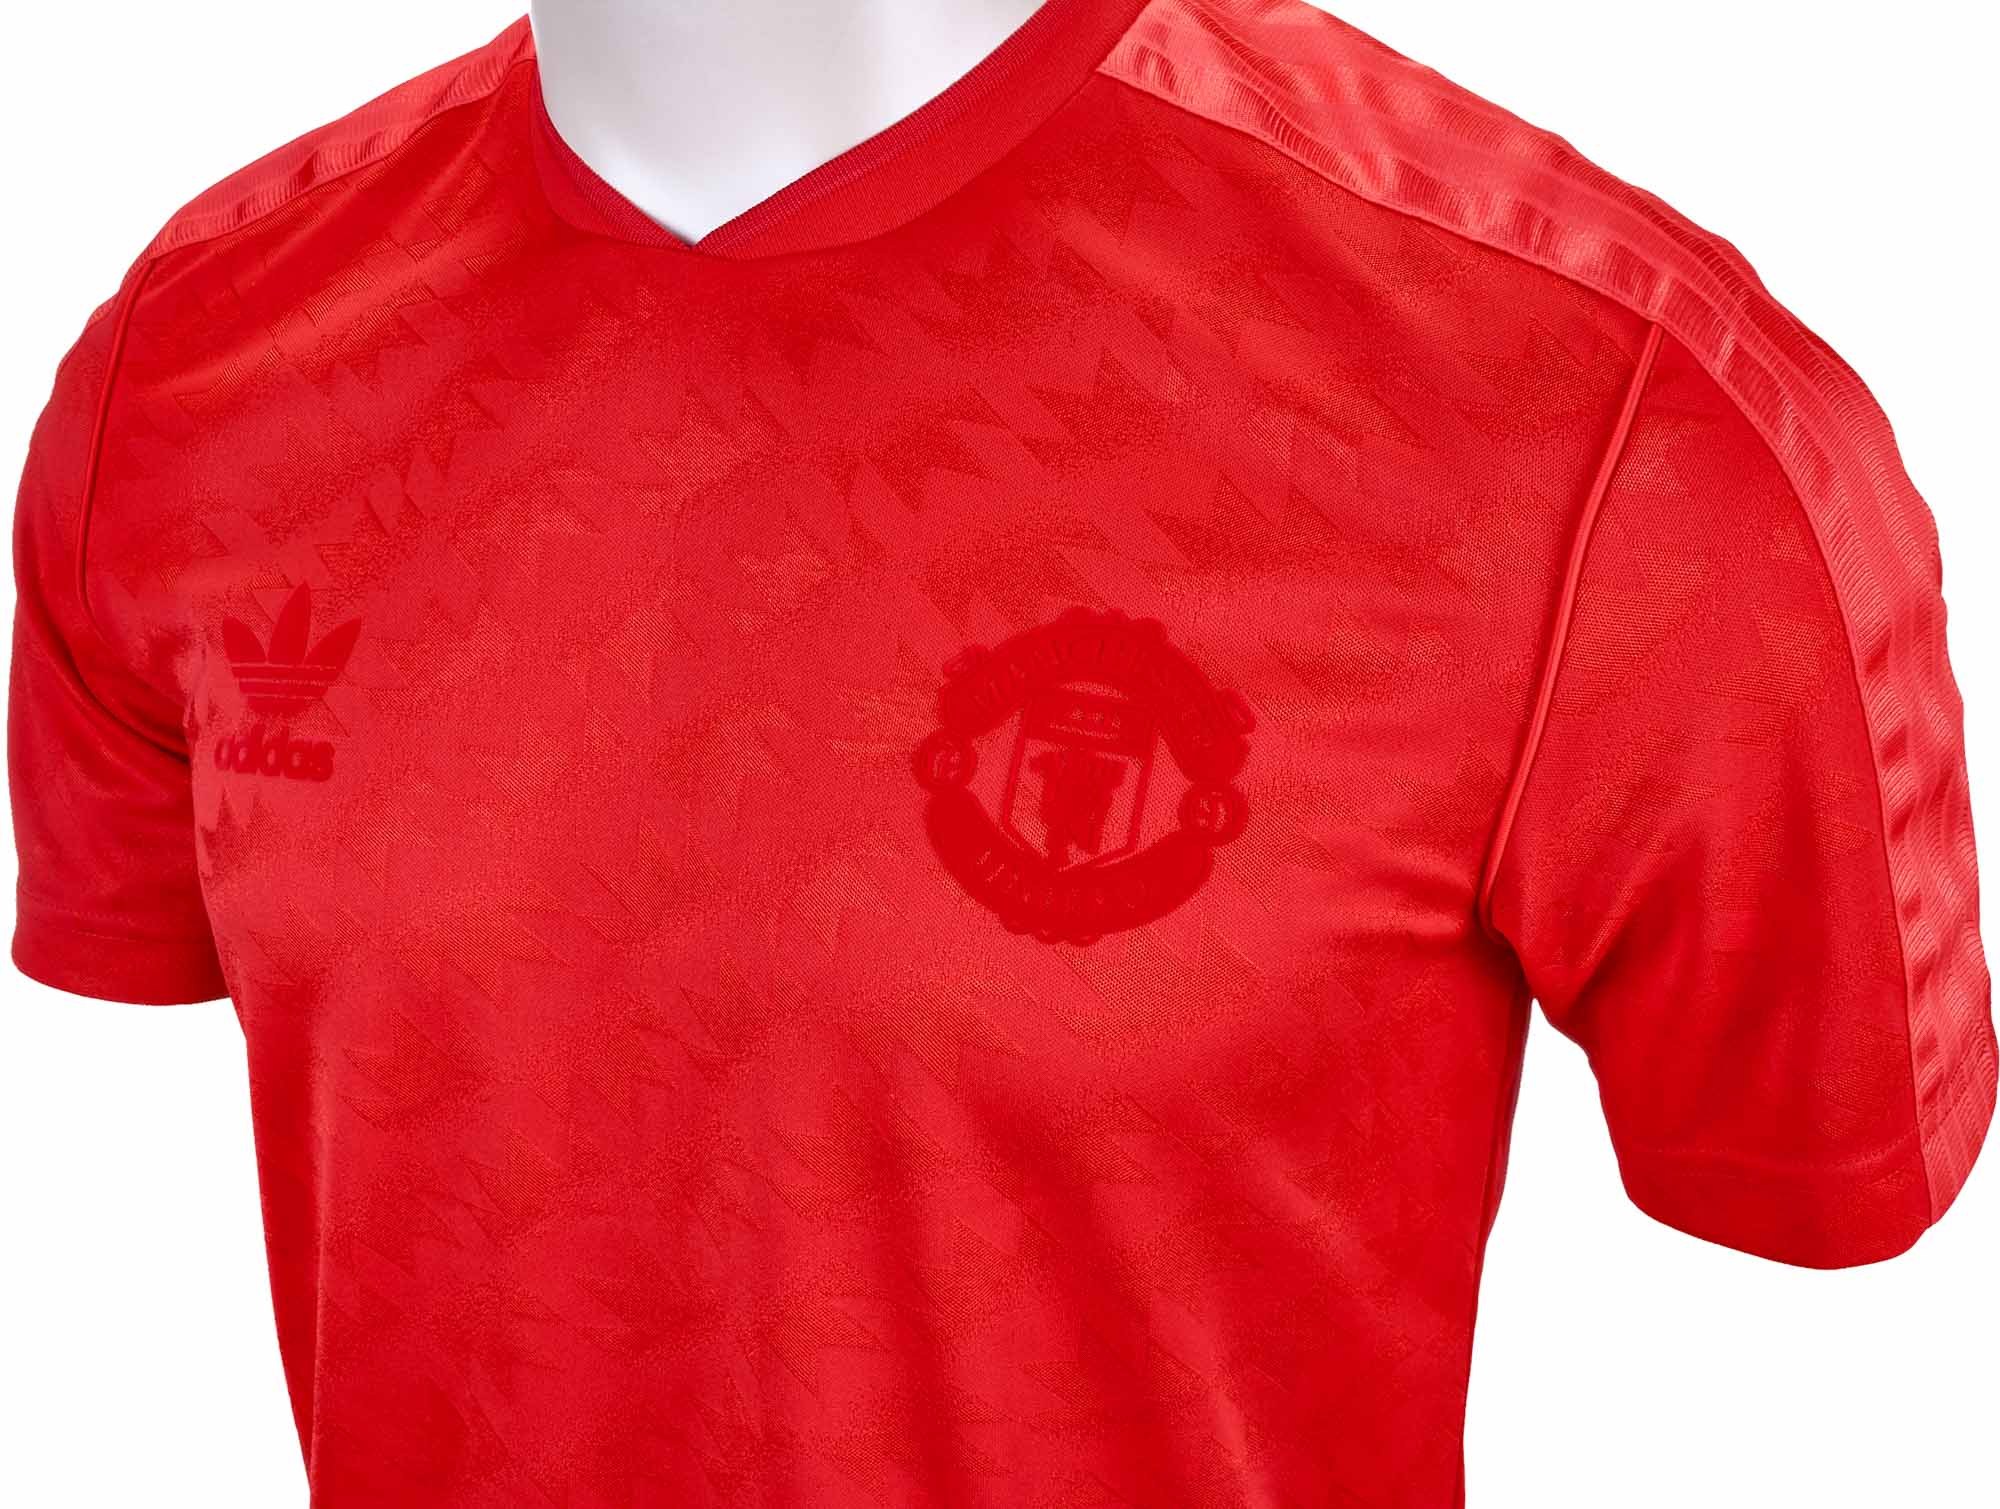 Manchester United Retro Jersey Adidas Shop -  1694668738